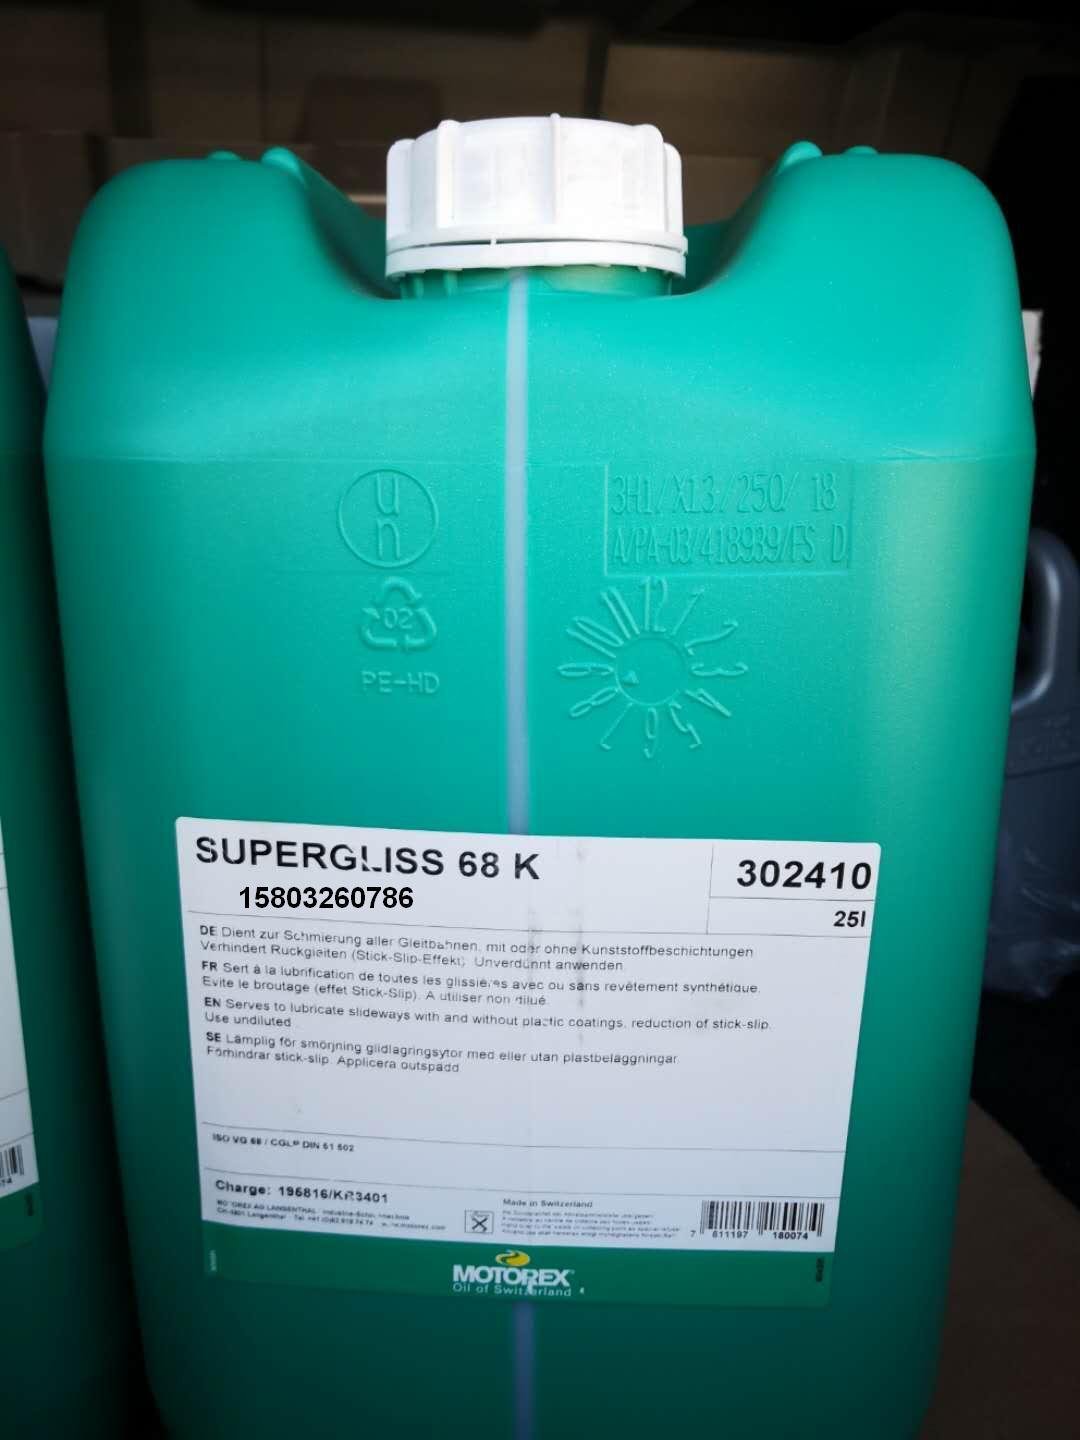 SUPERGLISS K導軌潤滑油